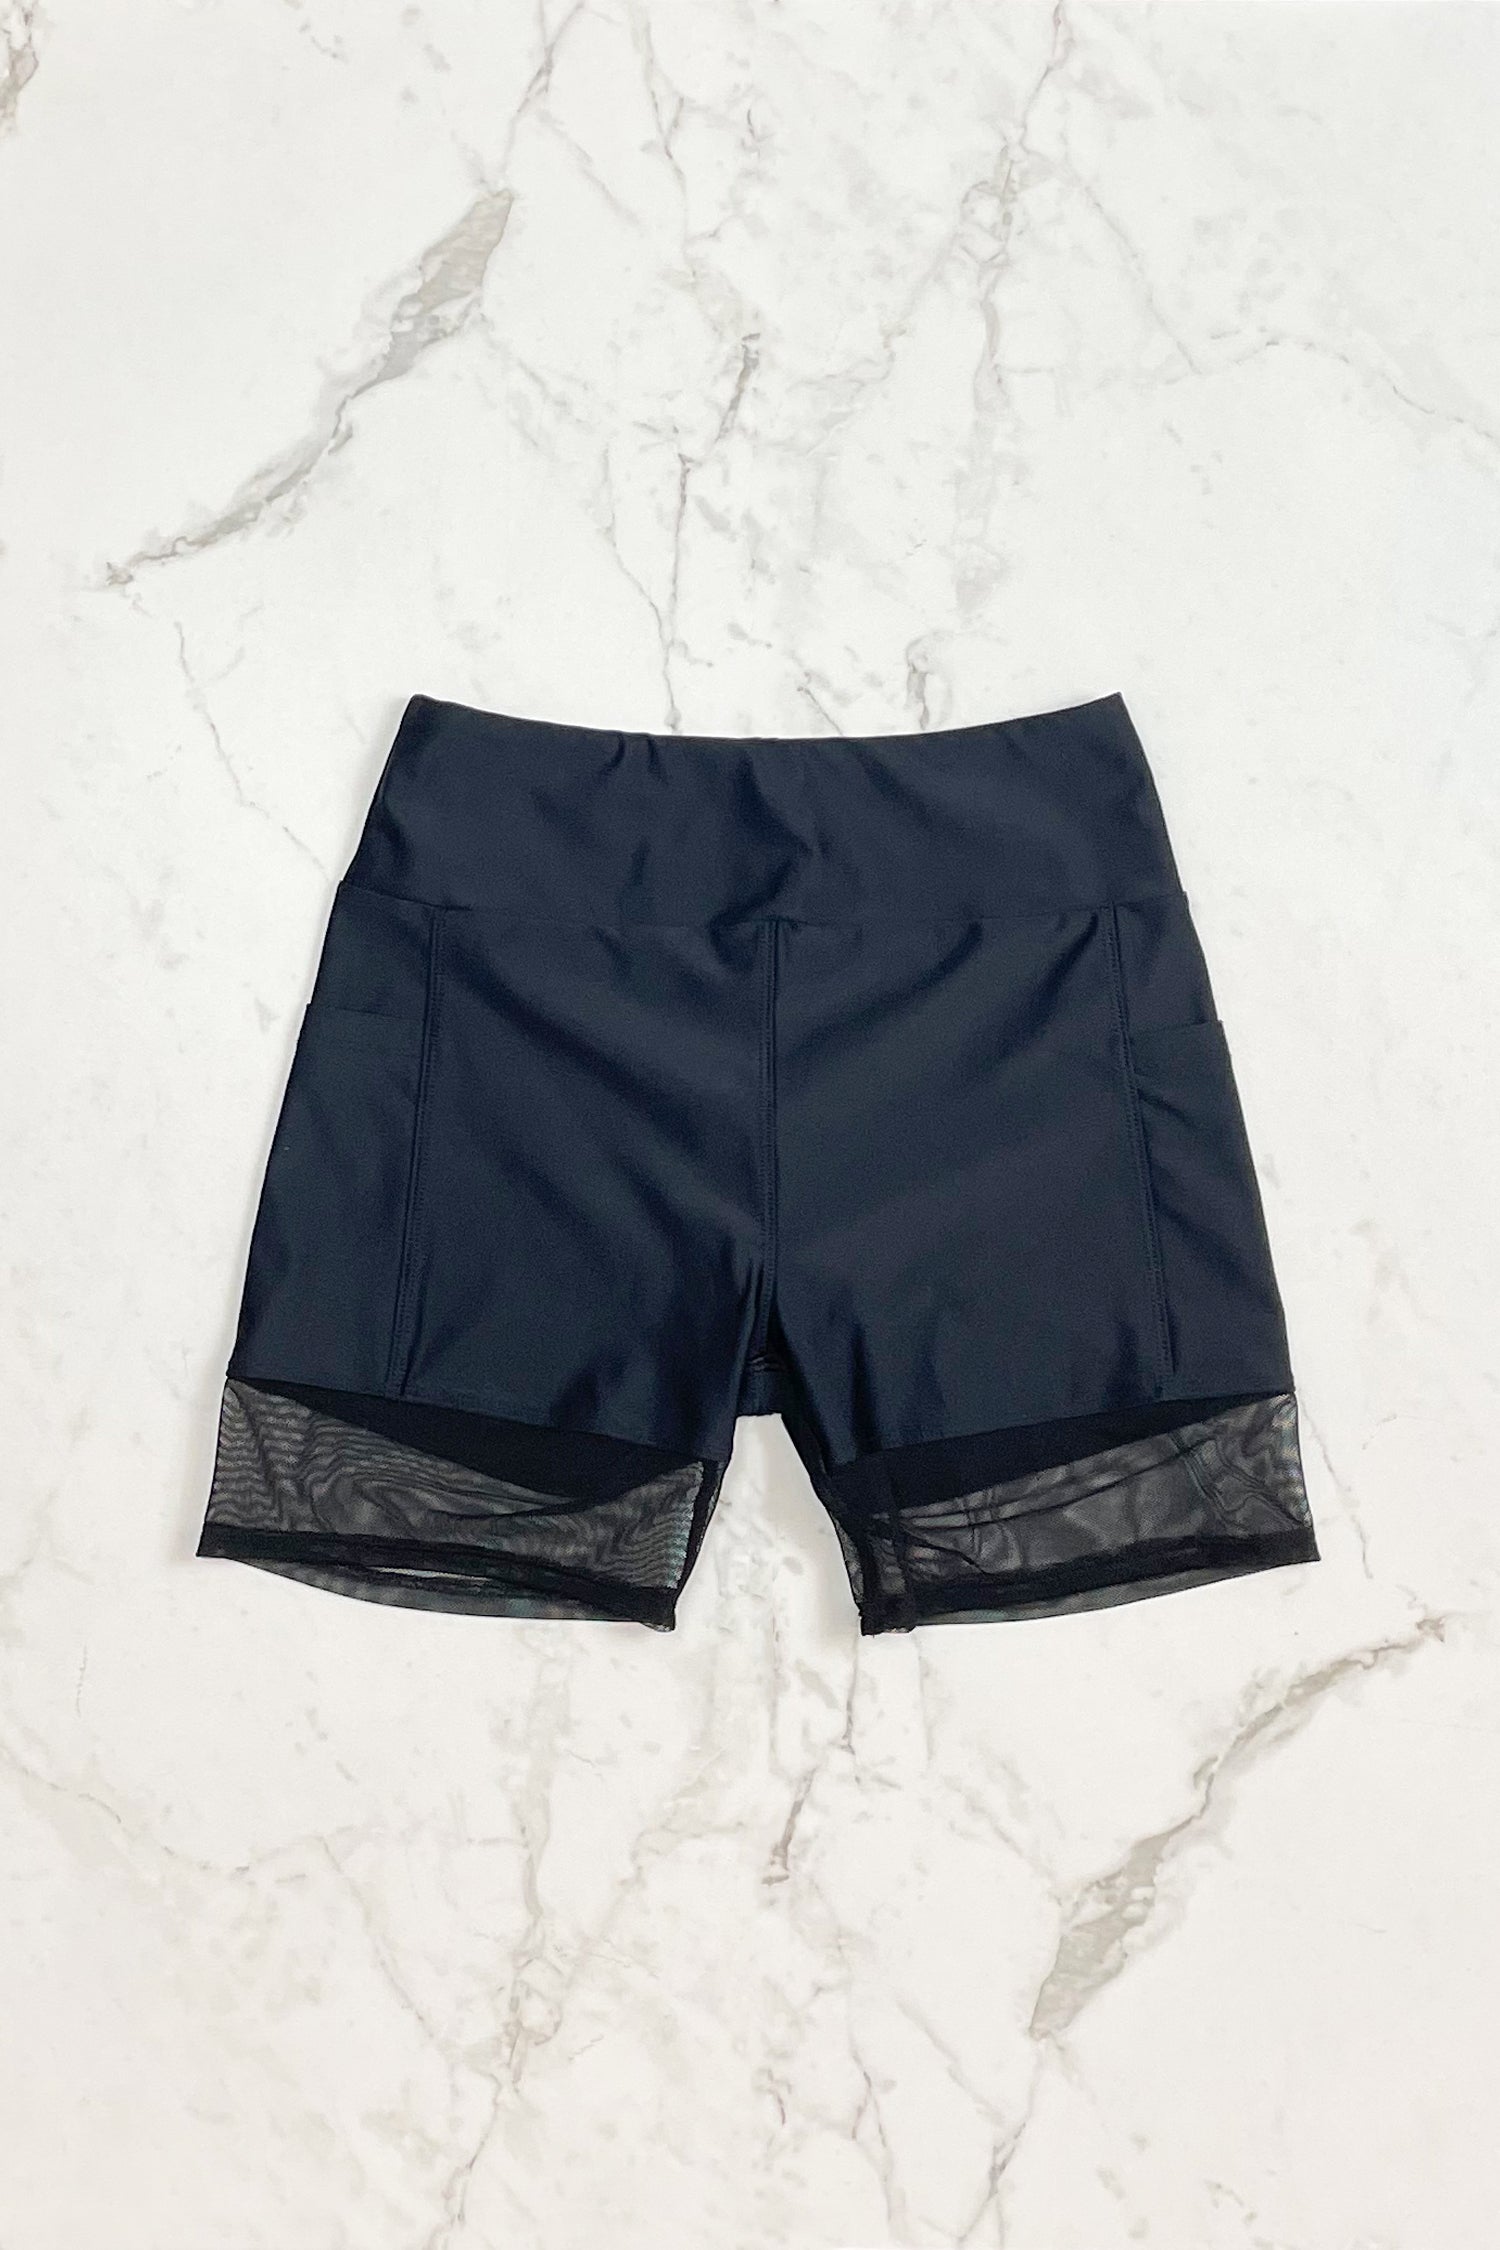 Short shorts – Black and mesh – Selfish swimwear